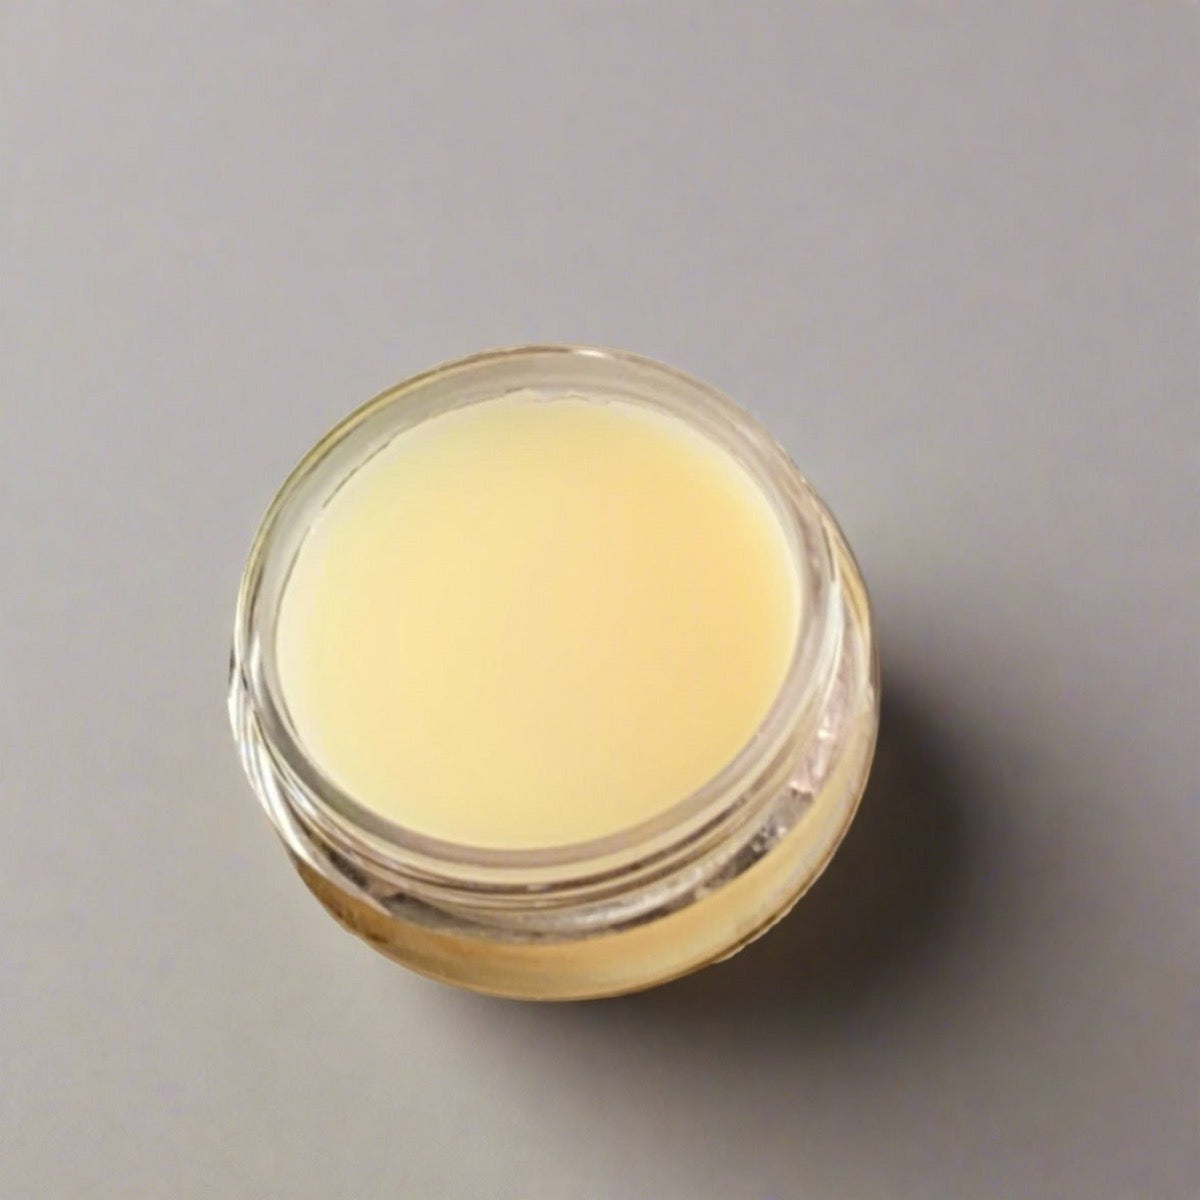 Small jar of Bioluminescence Argan Oil Lip Balm, a natural botanical solution for dry lips